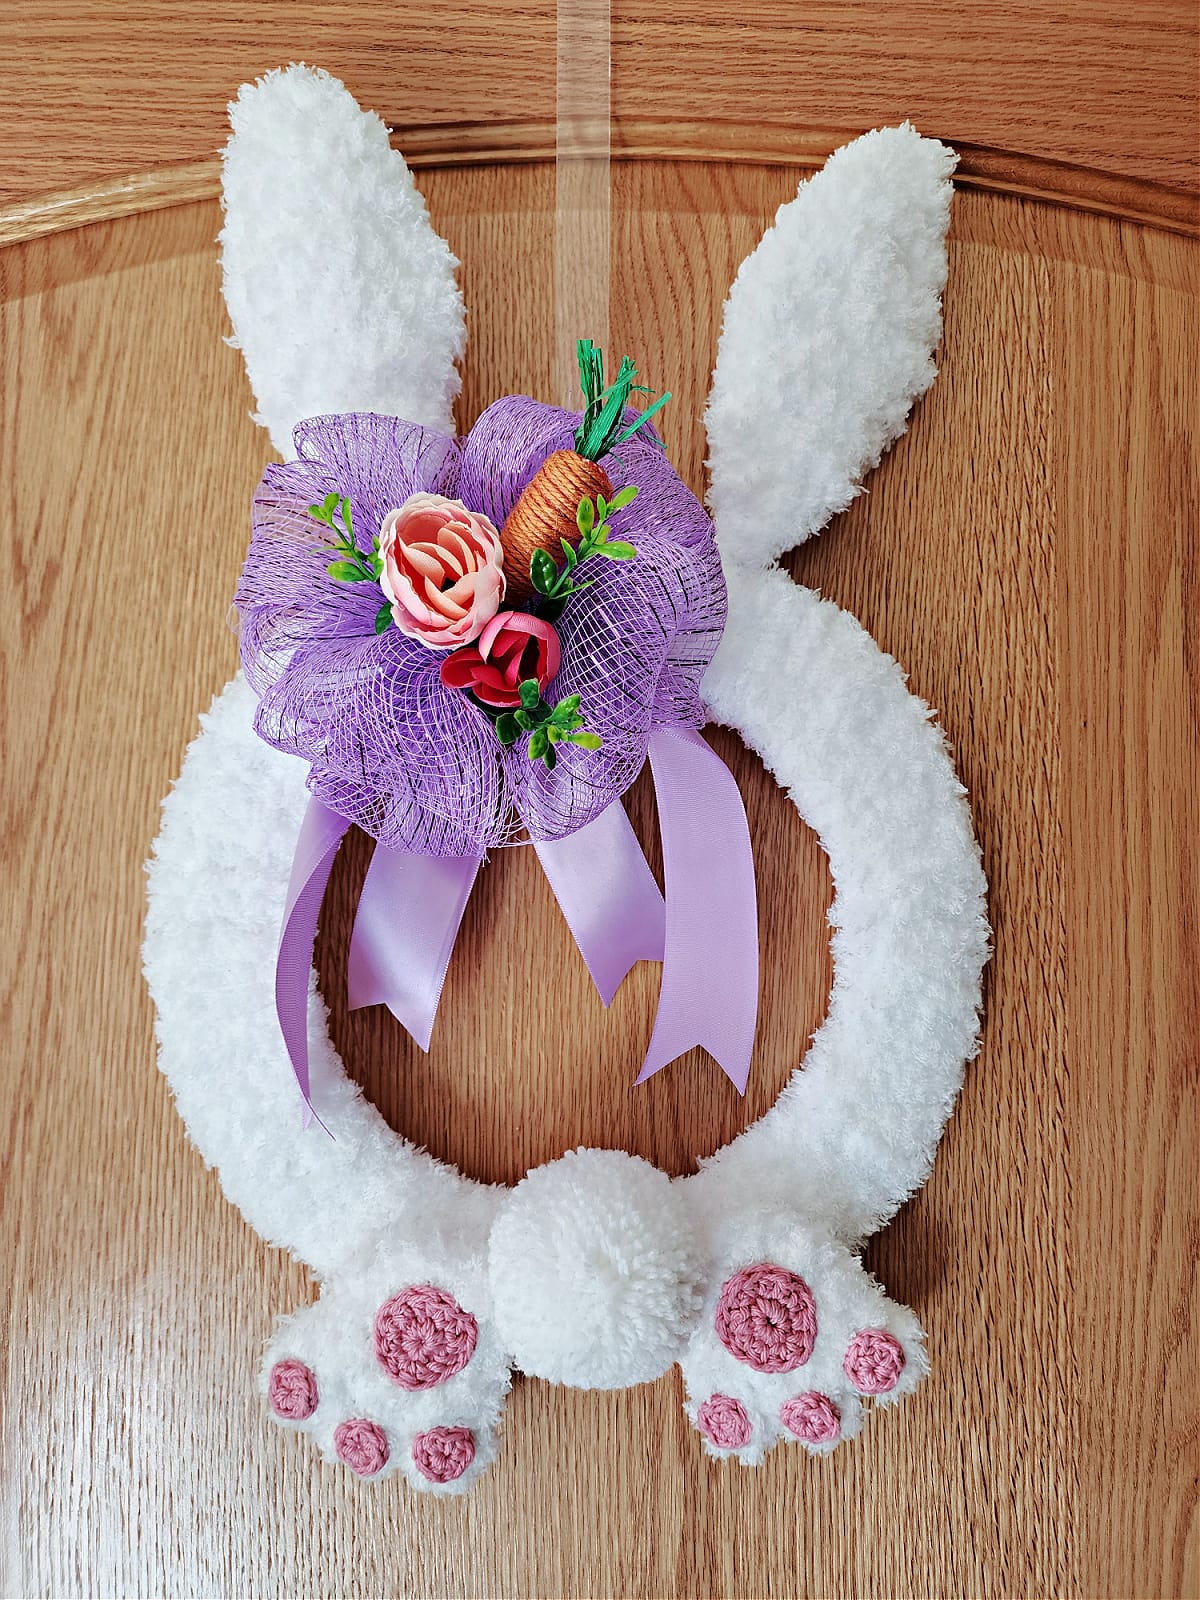 Crochet bunny wreath made with diy coat hanger bunny ears.